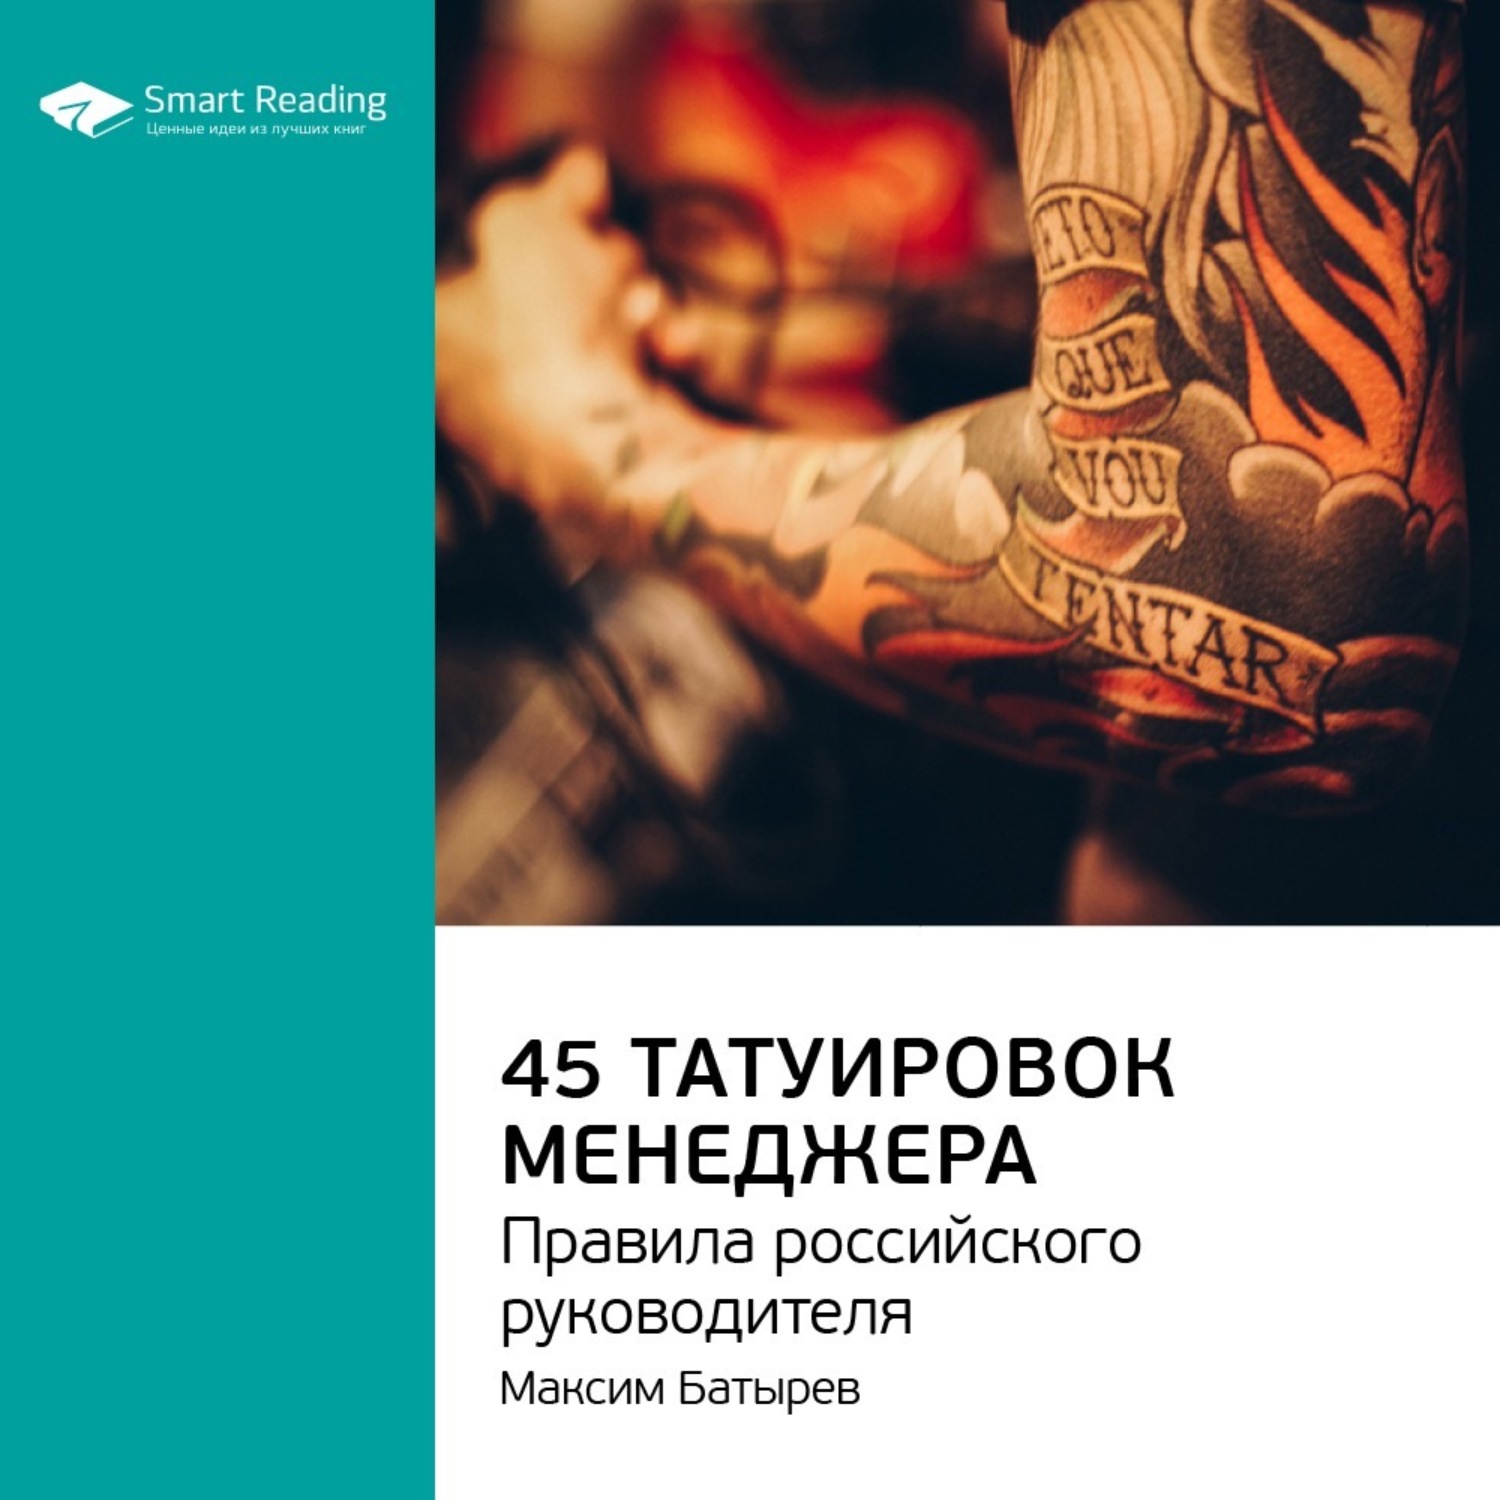 Книга Максима Батырева 45 татуировок